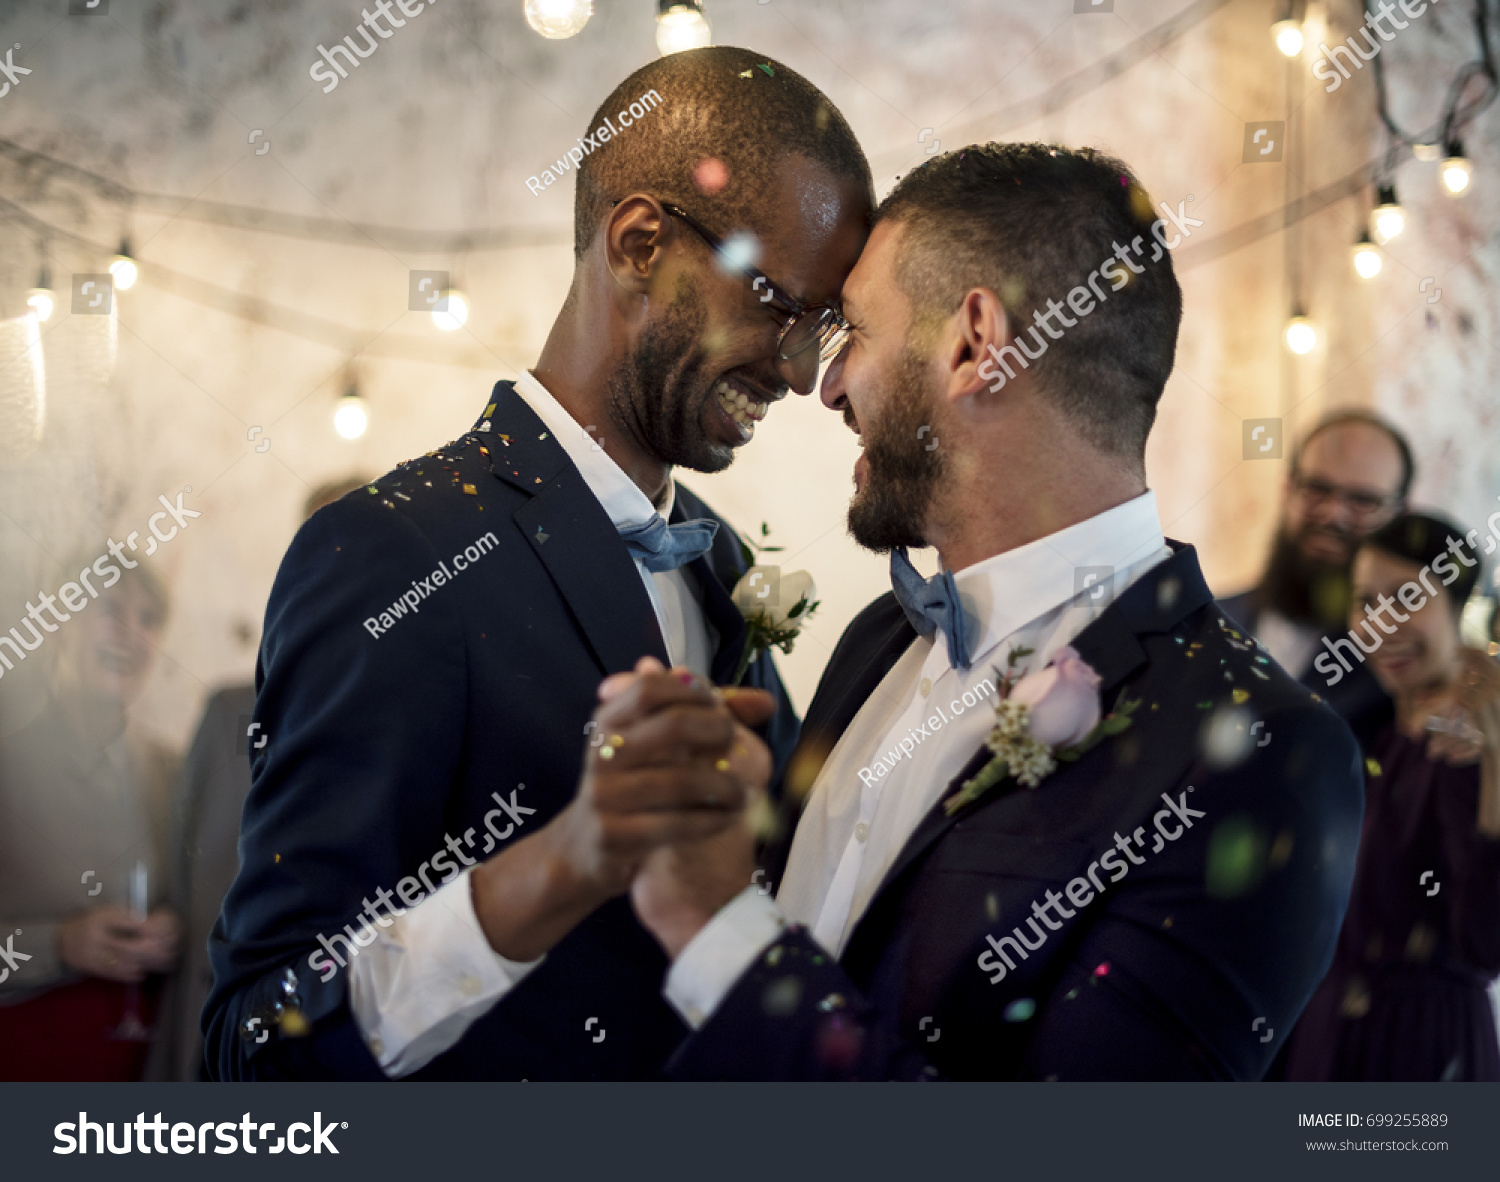 Closeup of Newlywed Gay Couple Dancing on Wedding Celebration #699255889